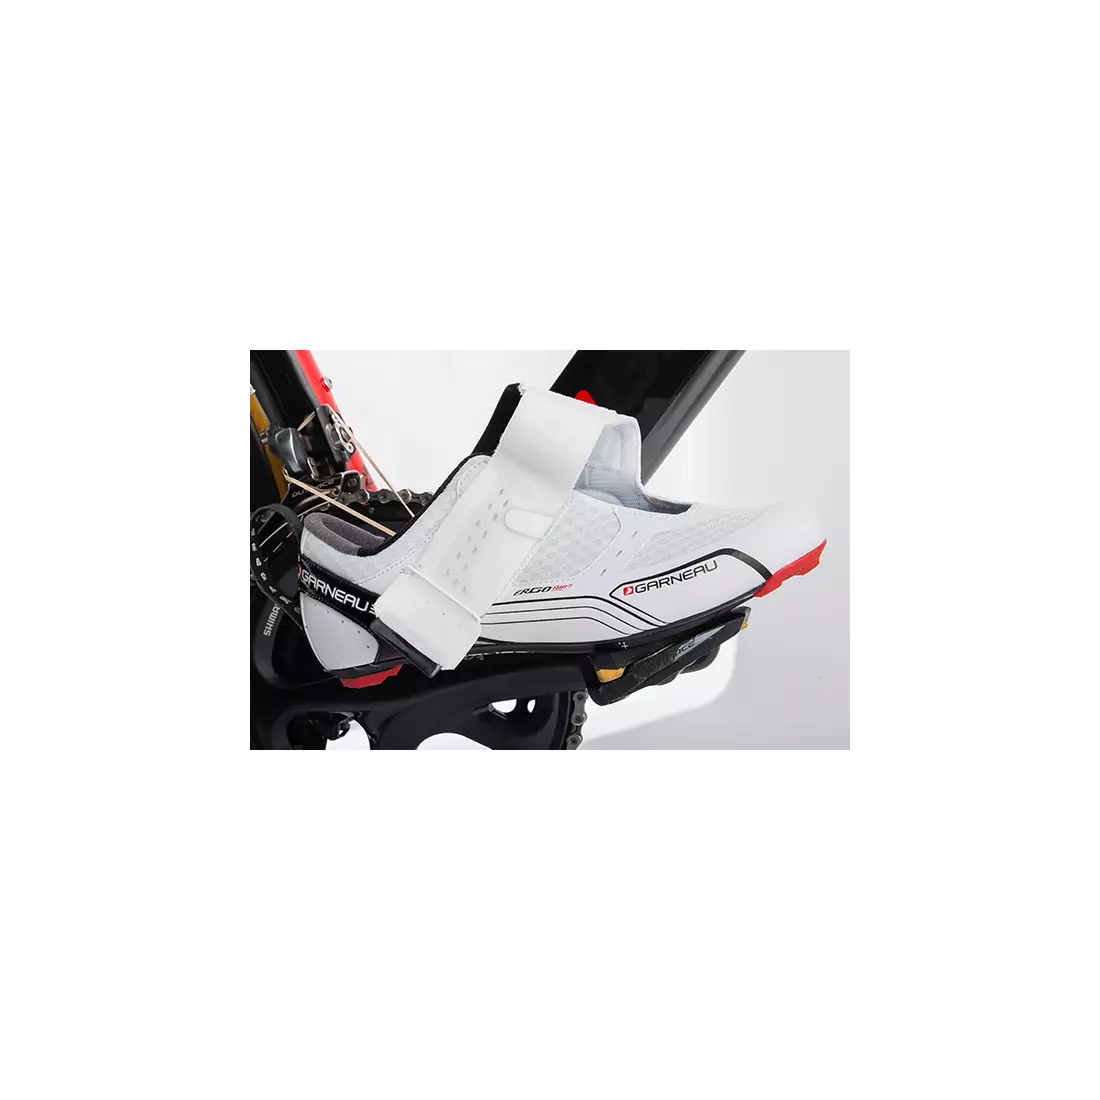 LOUIS GARNEAU TRI X-LITE professzionális triatlon cipő, fehér